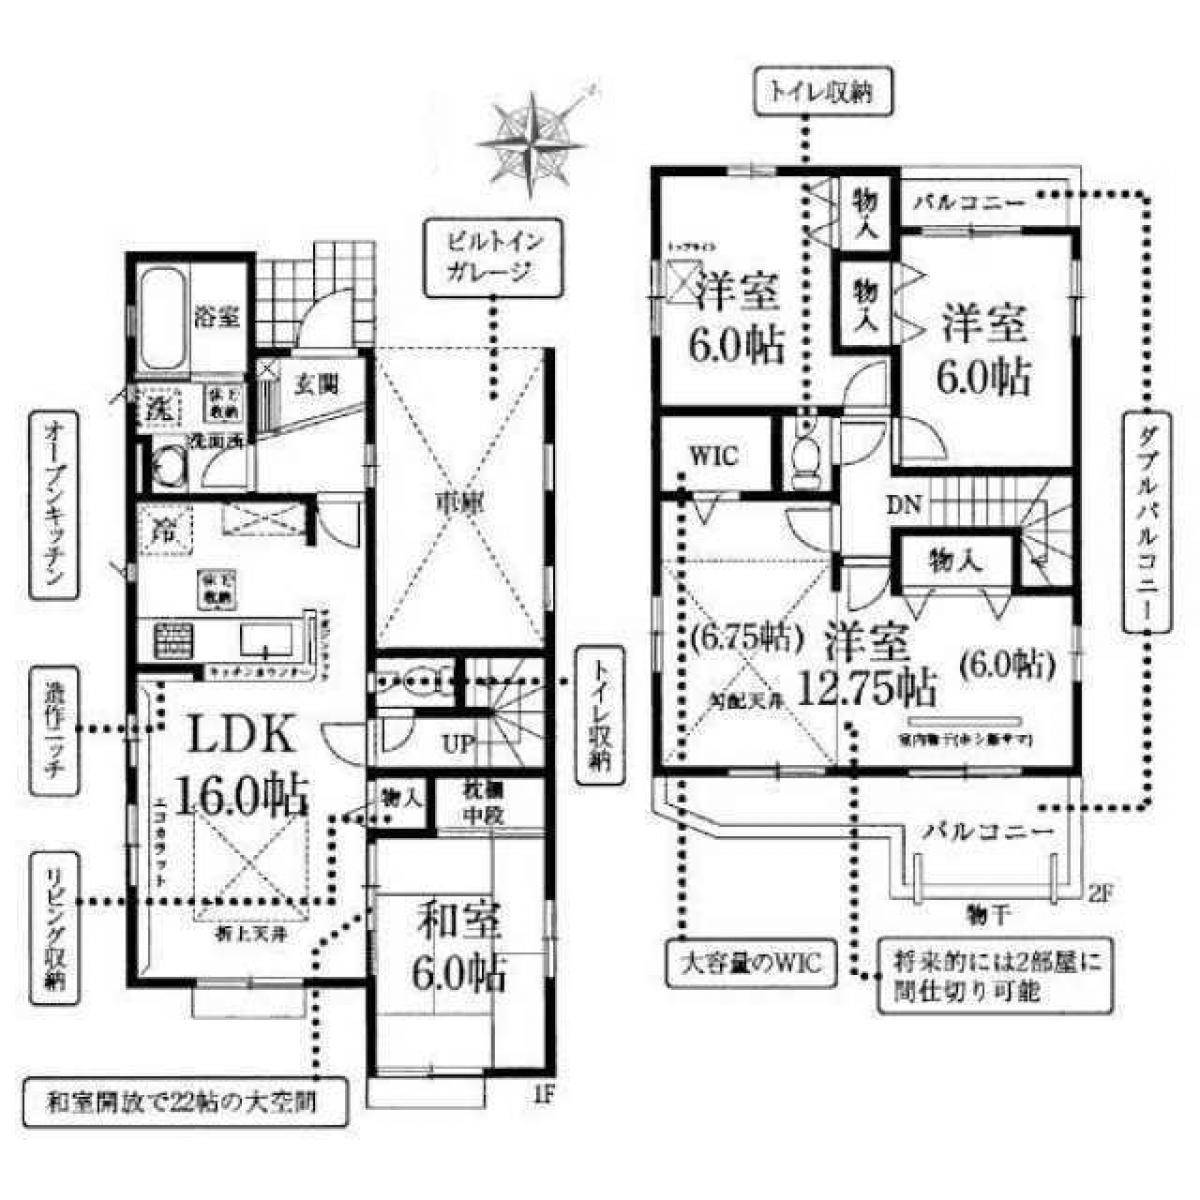 Picture of Home For Sale in Soka Shi, Saitama, Japan